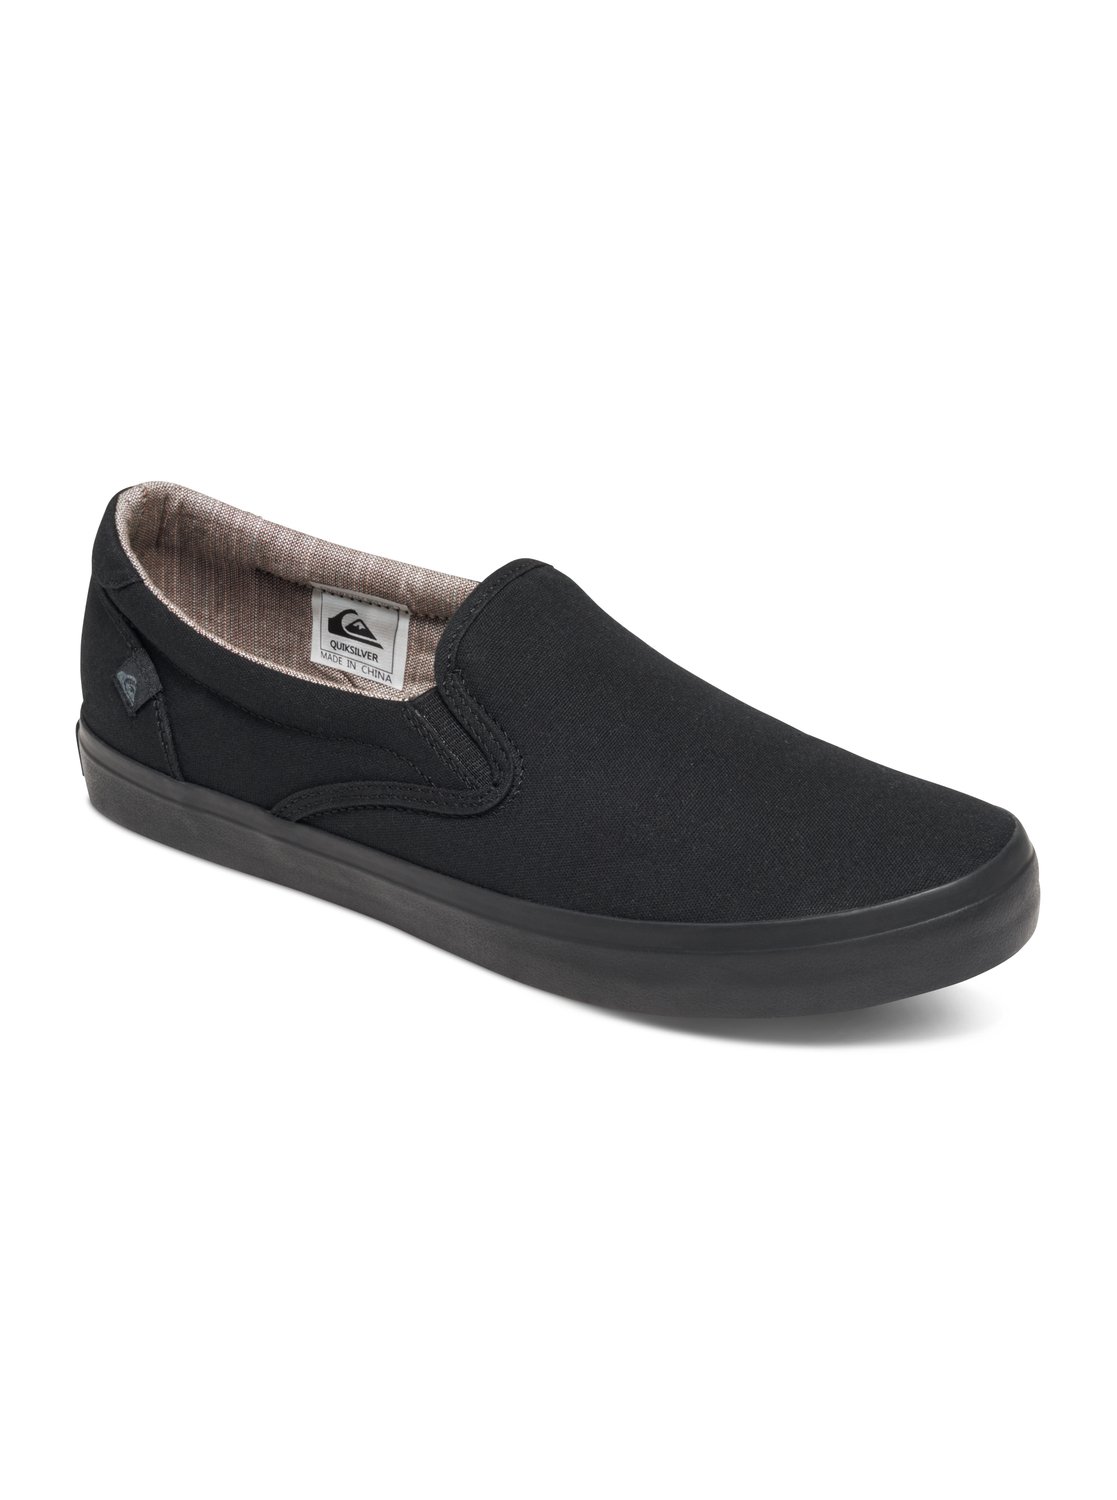 Shorebreak Slip-On Shoes AQYS300033 | Quiksilver